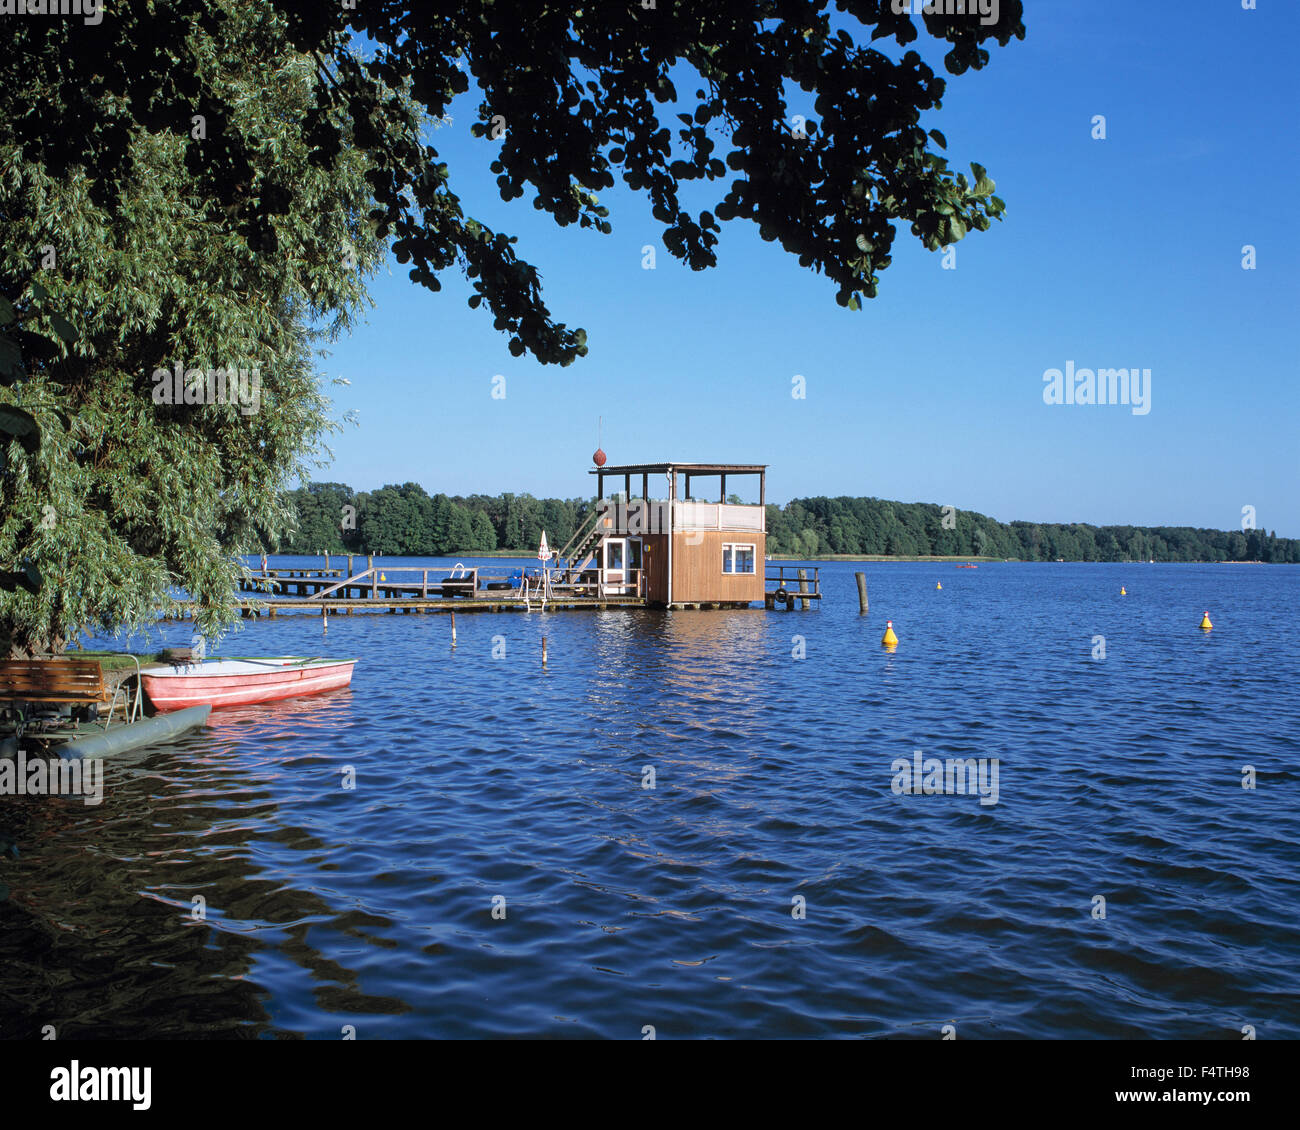 Germany, Europe, Brandenburg, Bad Saarow, boat house, jetty, Scharmützel lake, lake, Stock Photo